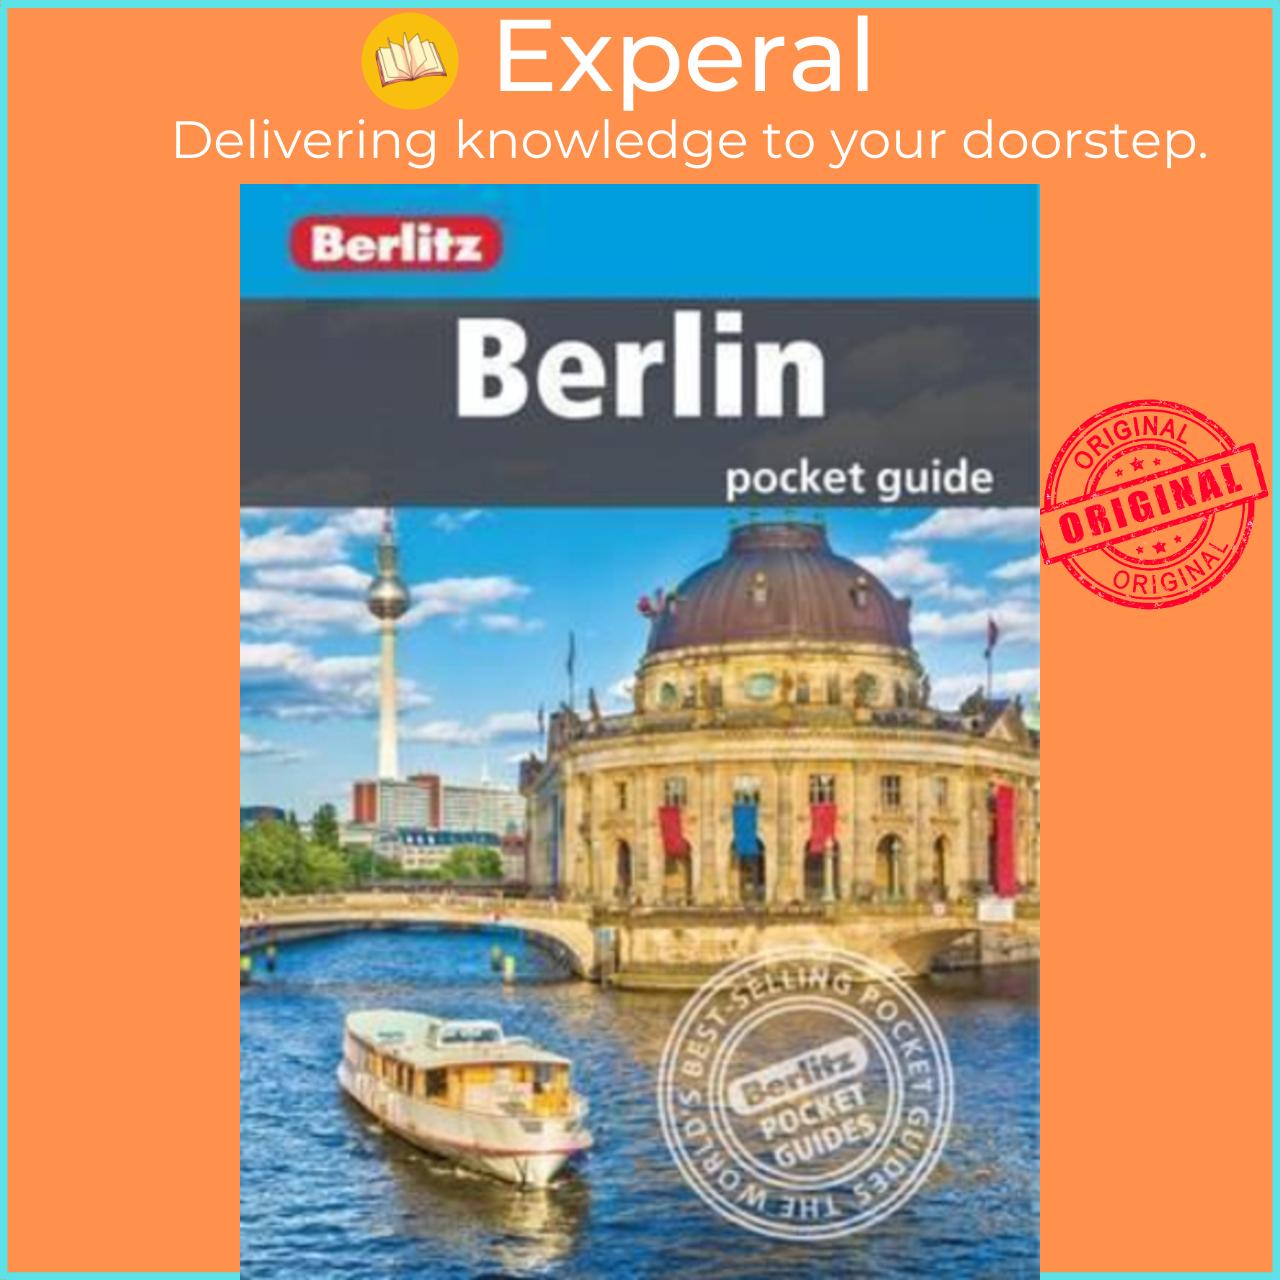 Sách - Berlitz Pocket Guide Berlin by Berlitz (UK edition, paperback)